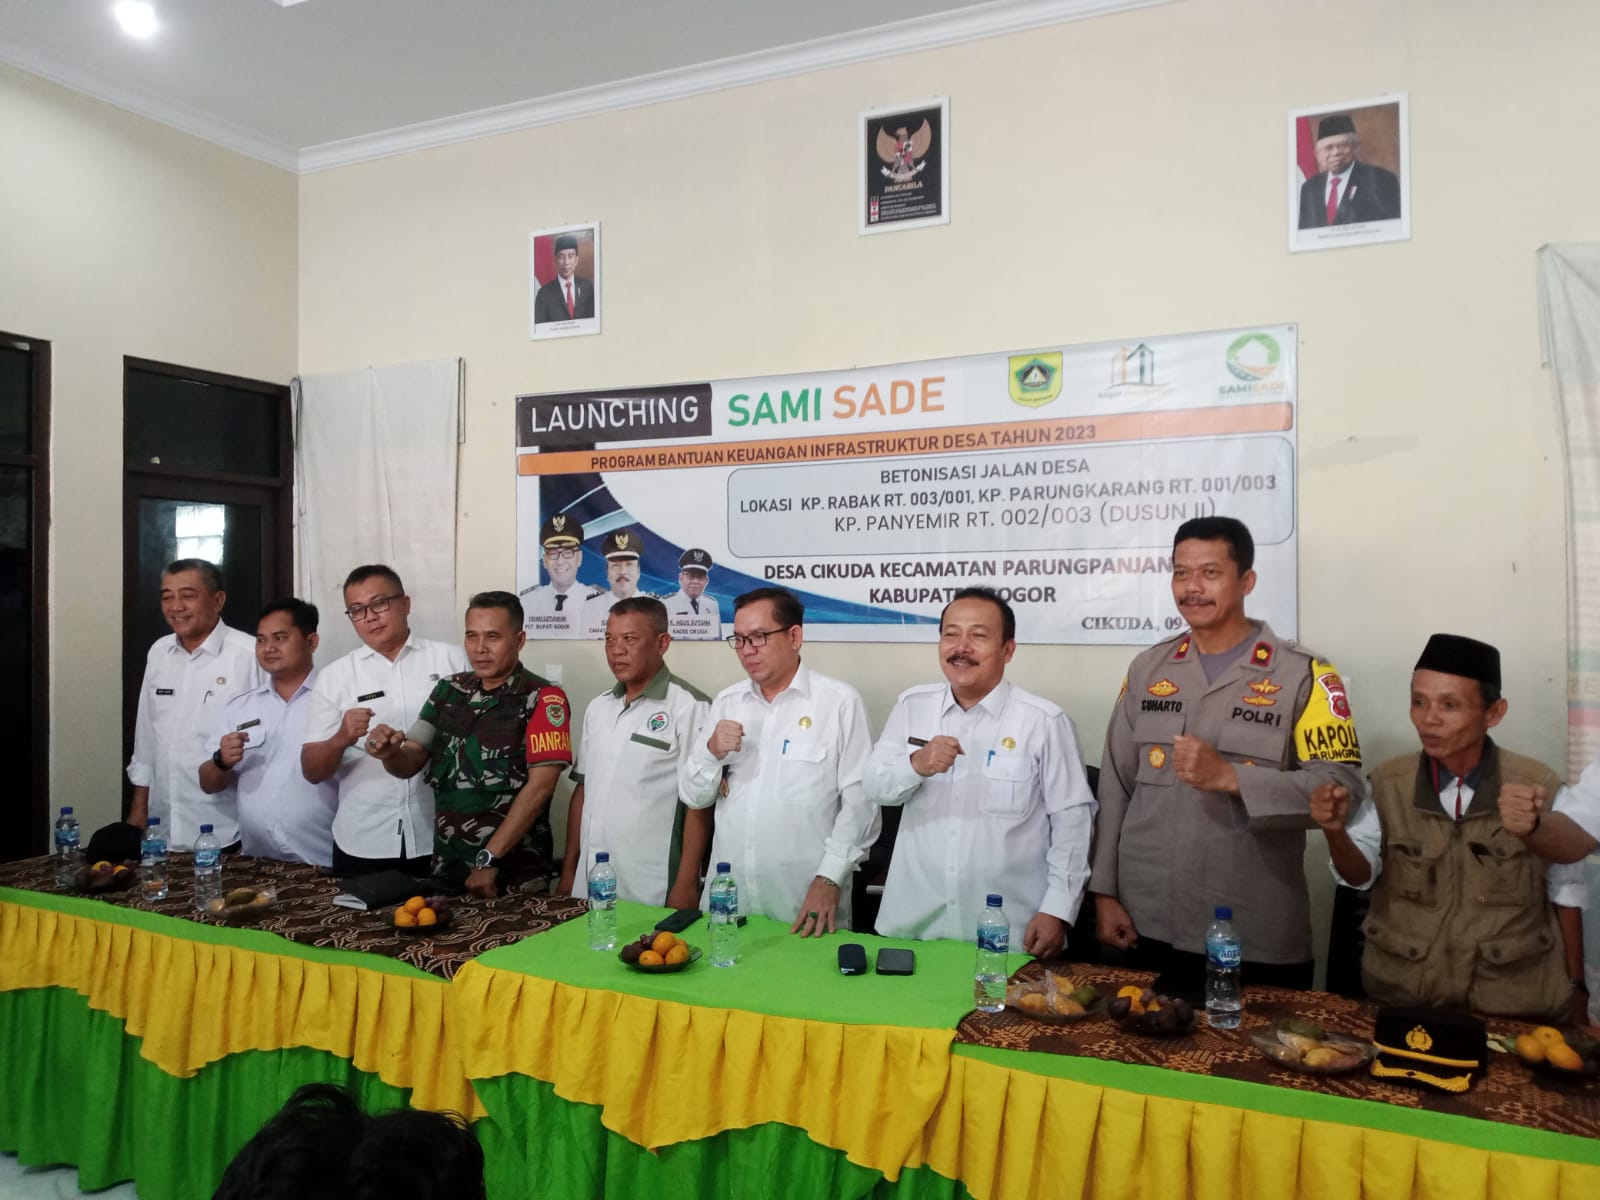 Launching Samisade Desa Cikuda Kecamatan Parung Panjang Bogor.